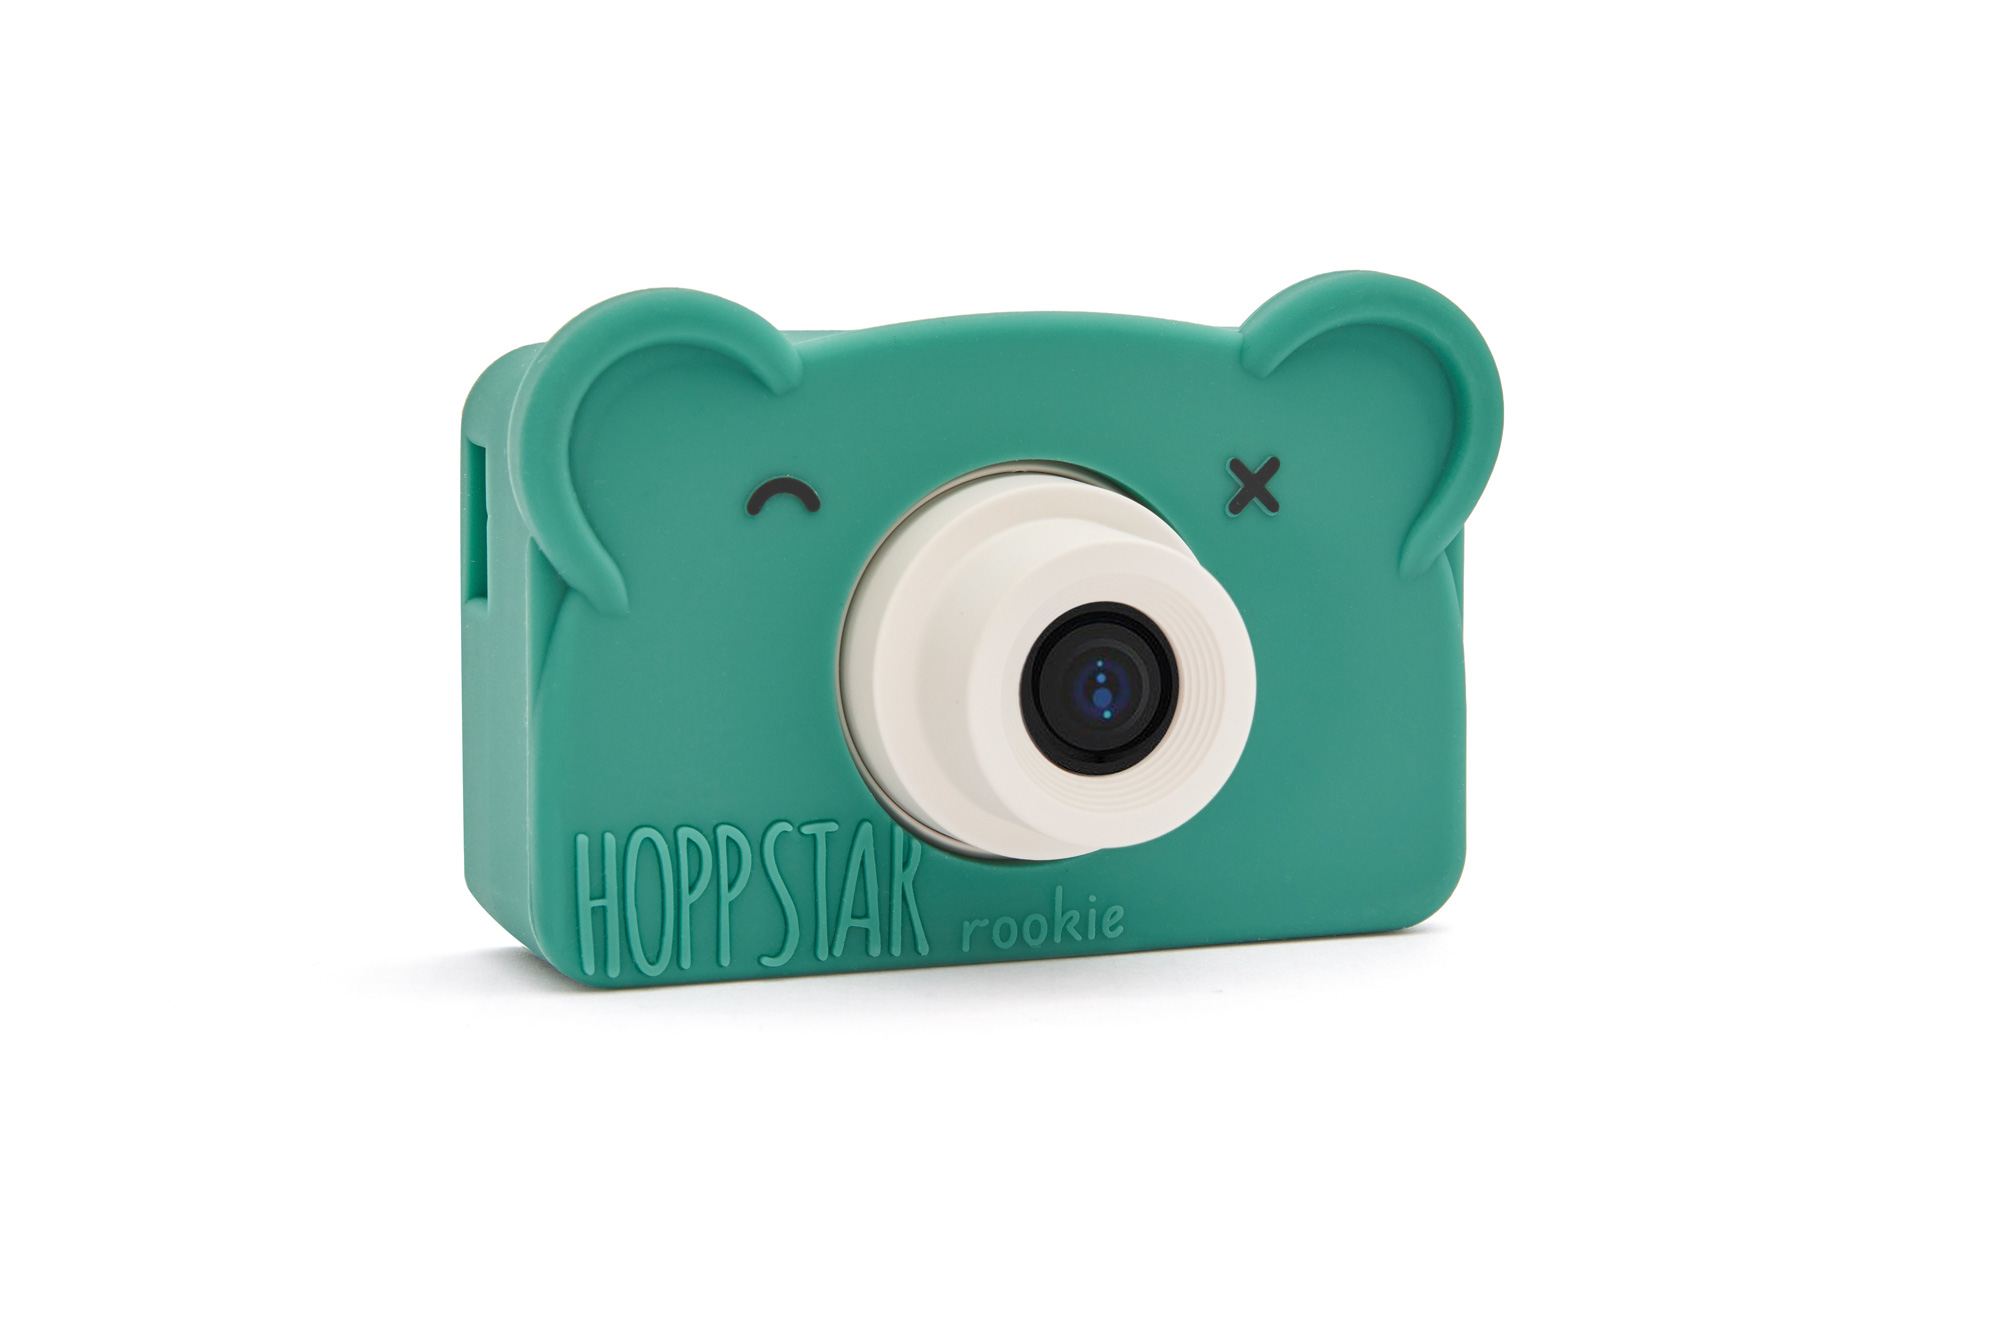 Hoppstar Rookie Kamera mit Bear Moss (Moosgrün) Silikonhülle, Frontalansicht leicht schräg